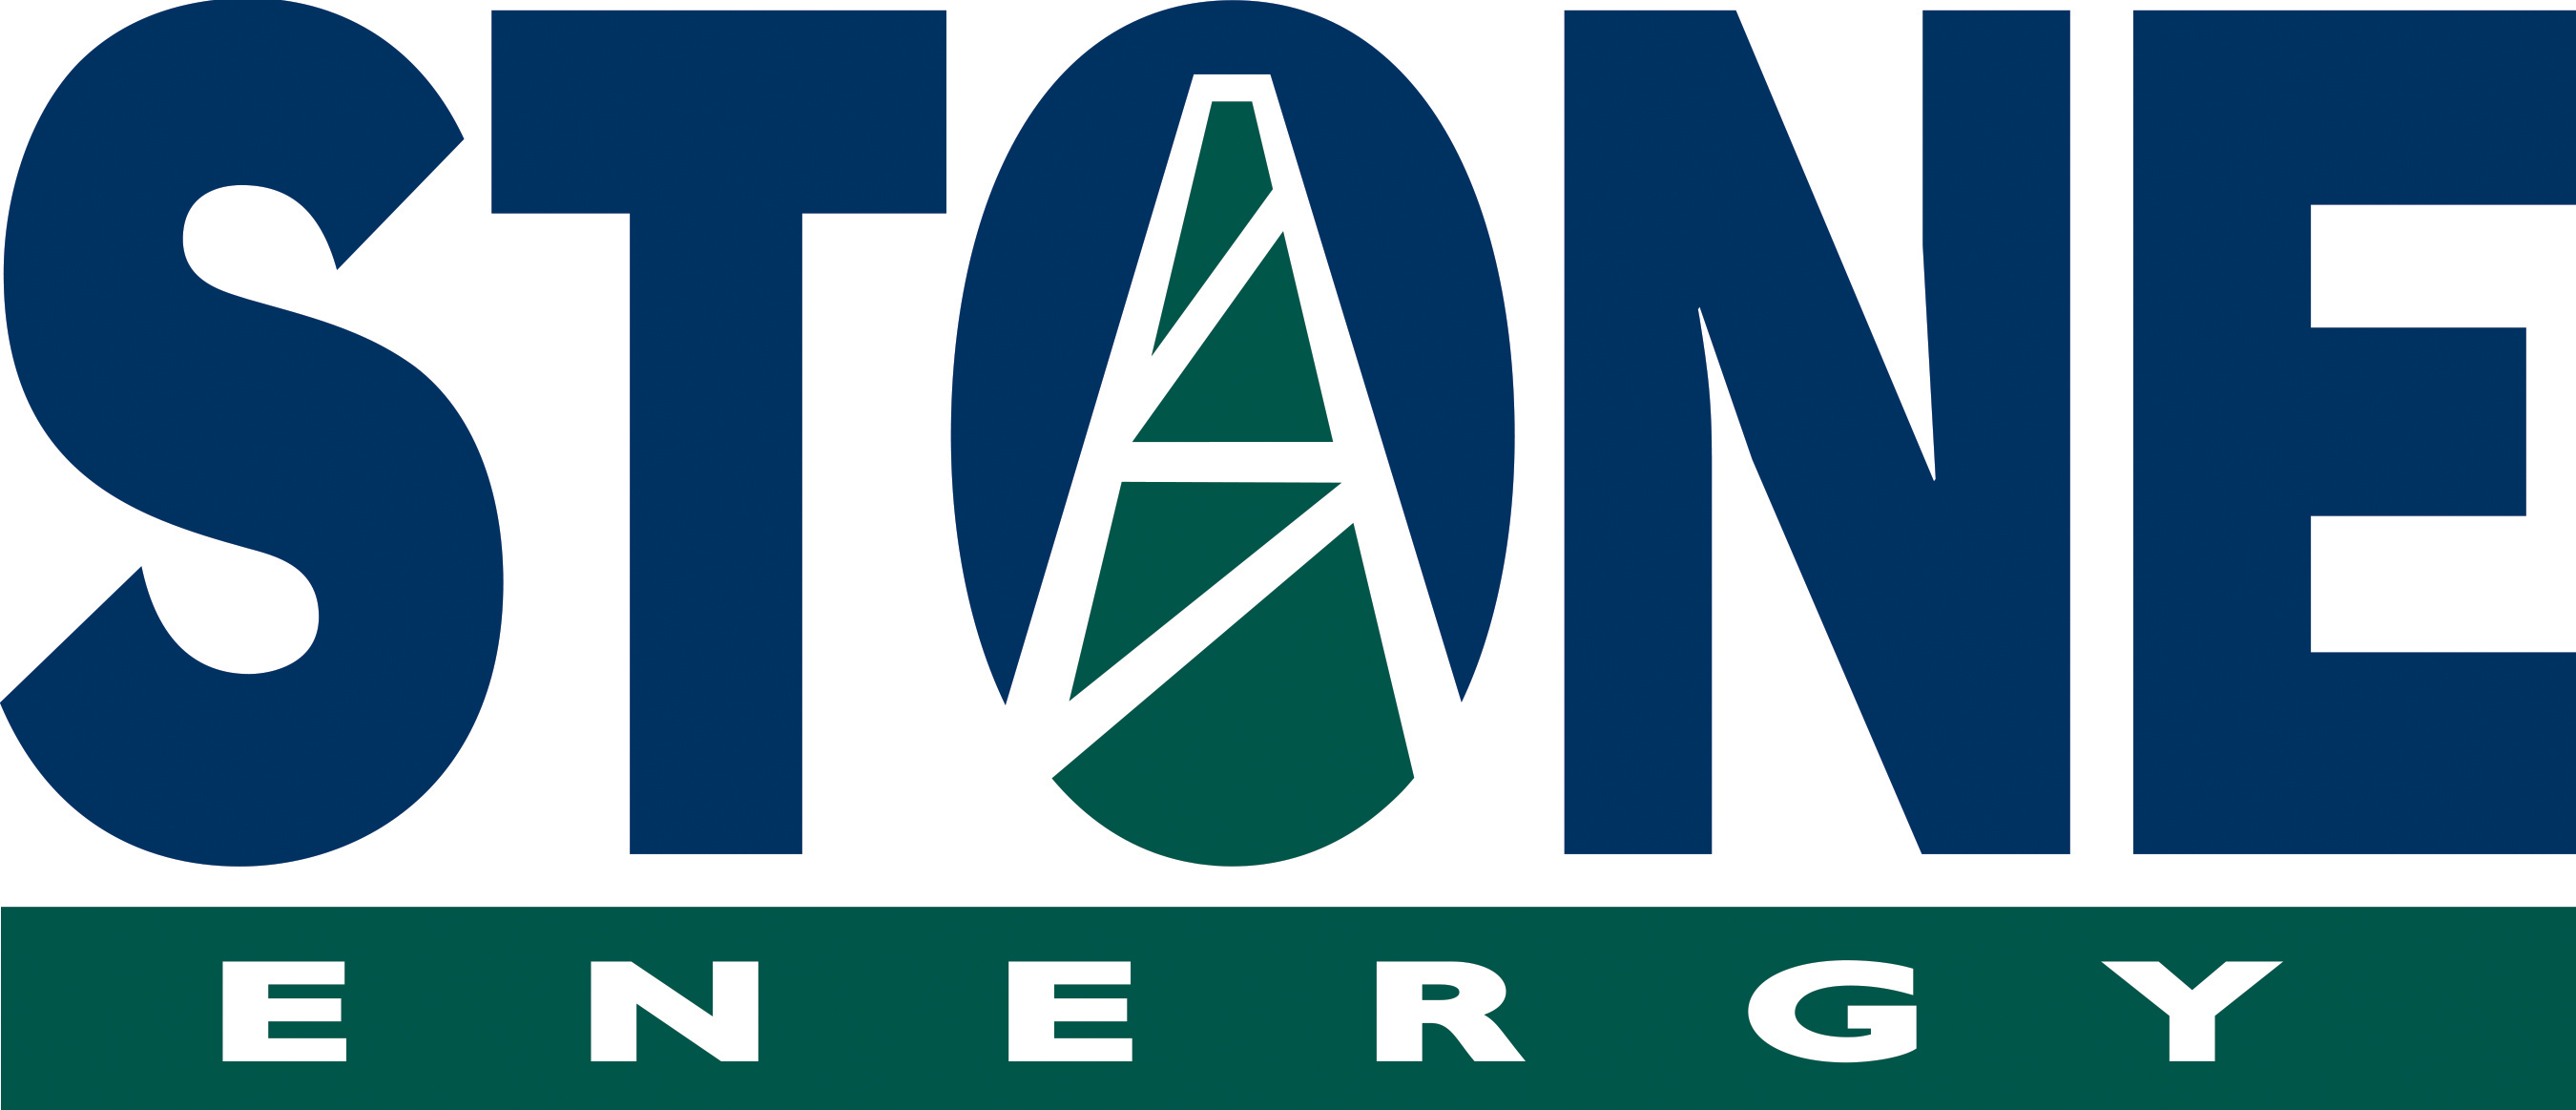 Stone Energy Corporation Logo. (PRNewsFoto/Stone Energy Corporation) (PRNewsFoto/)